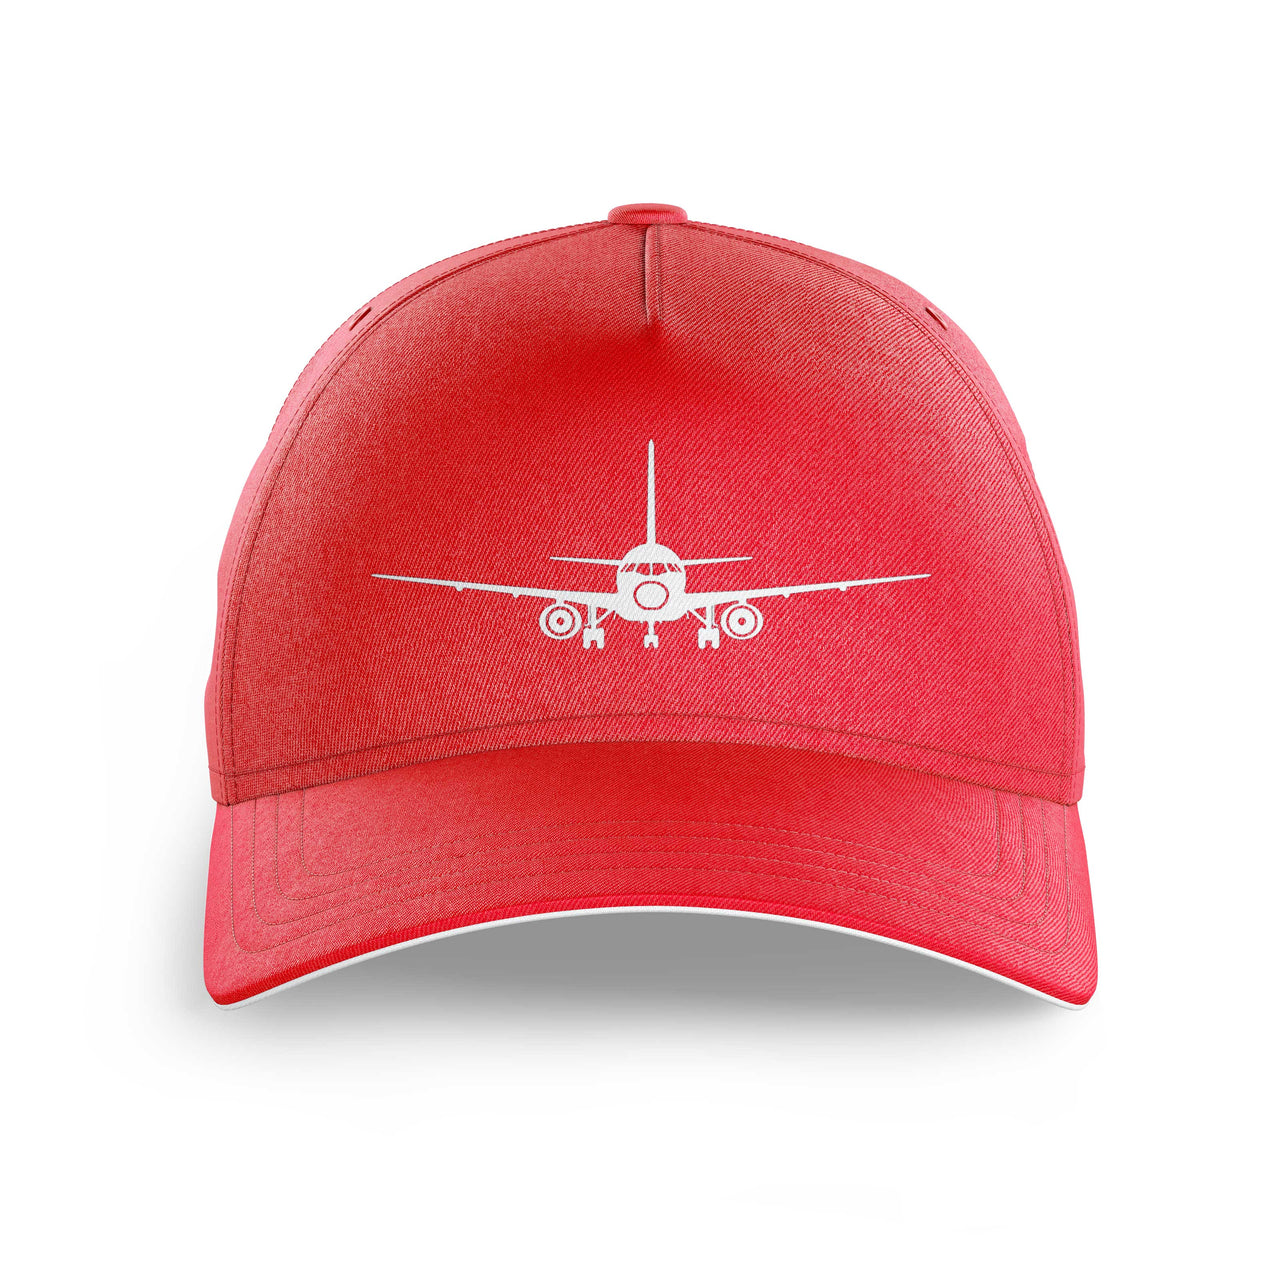 Sukhoi Superjet 100 Silhouette Printed Hats